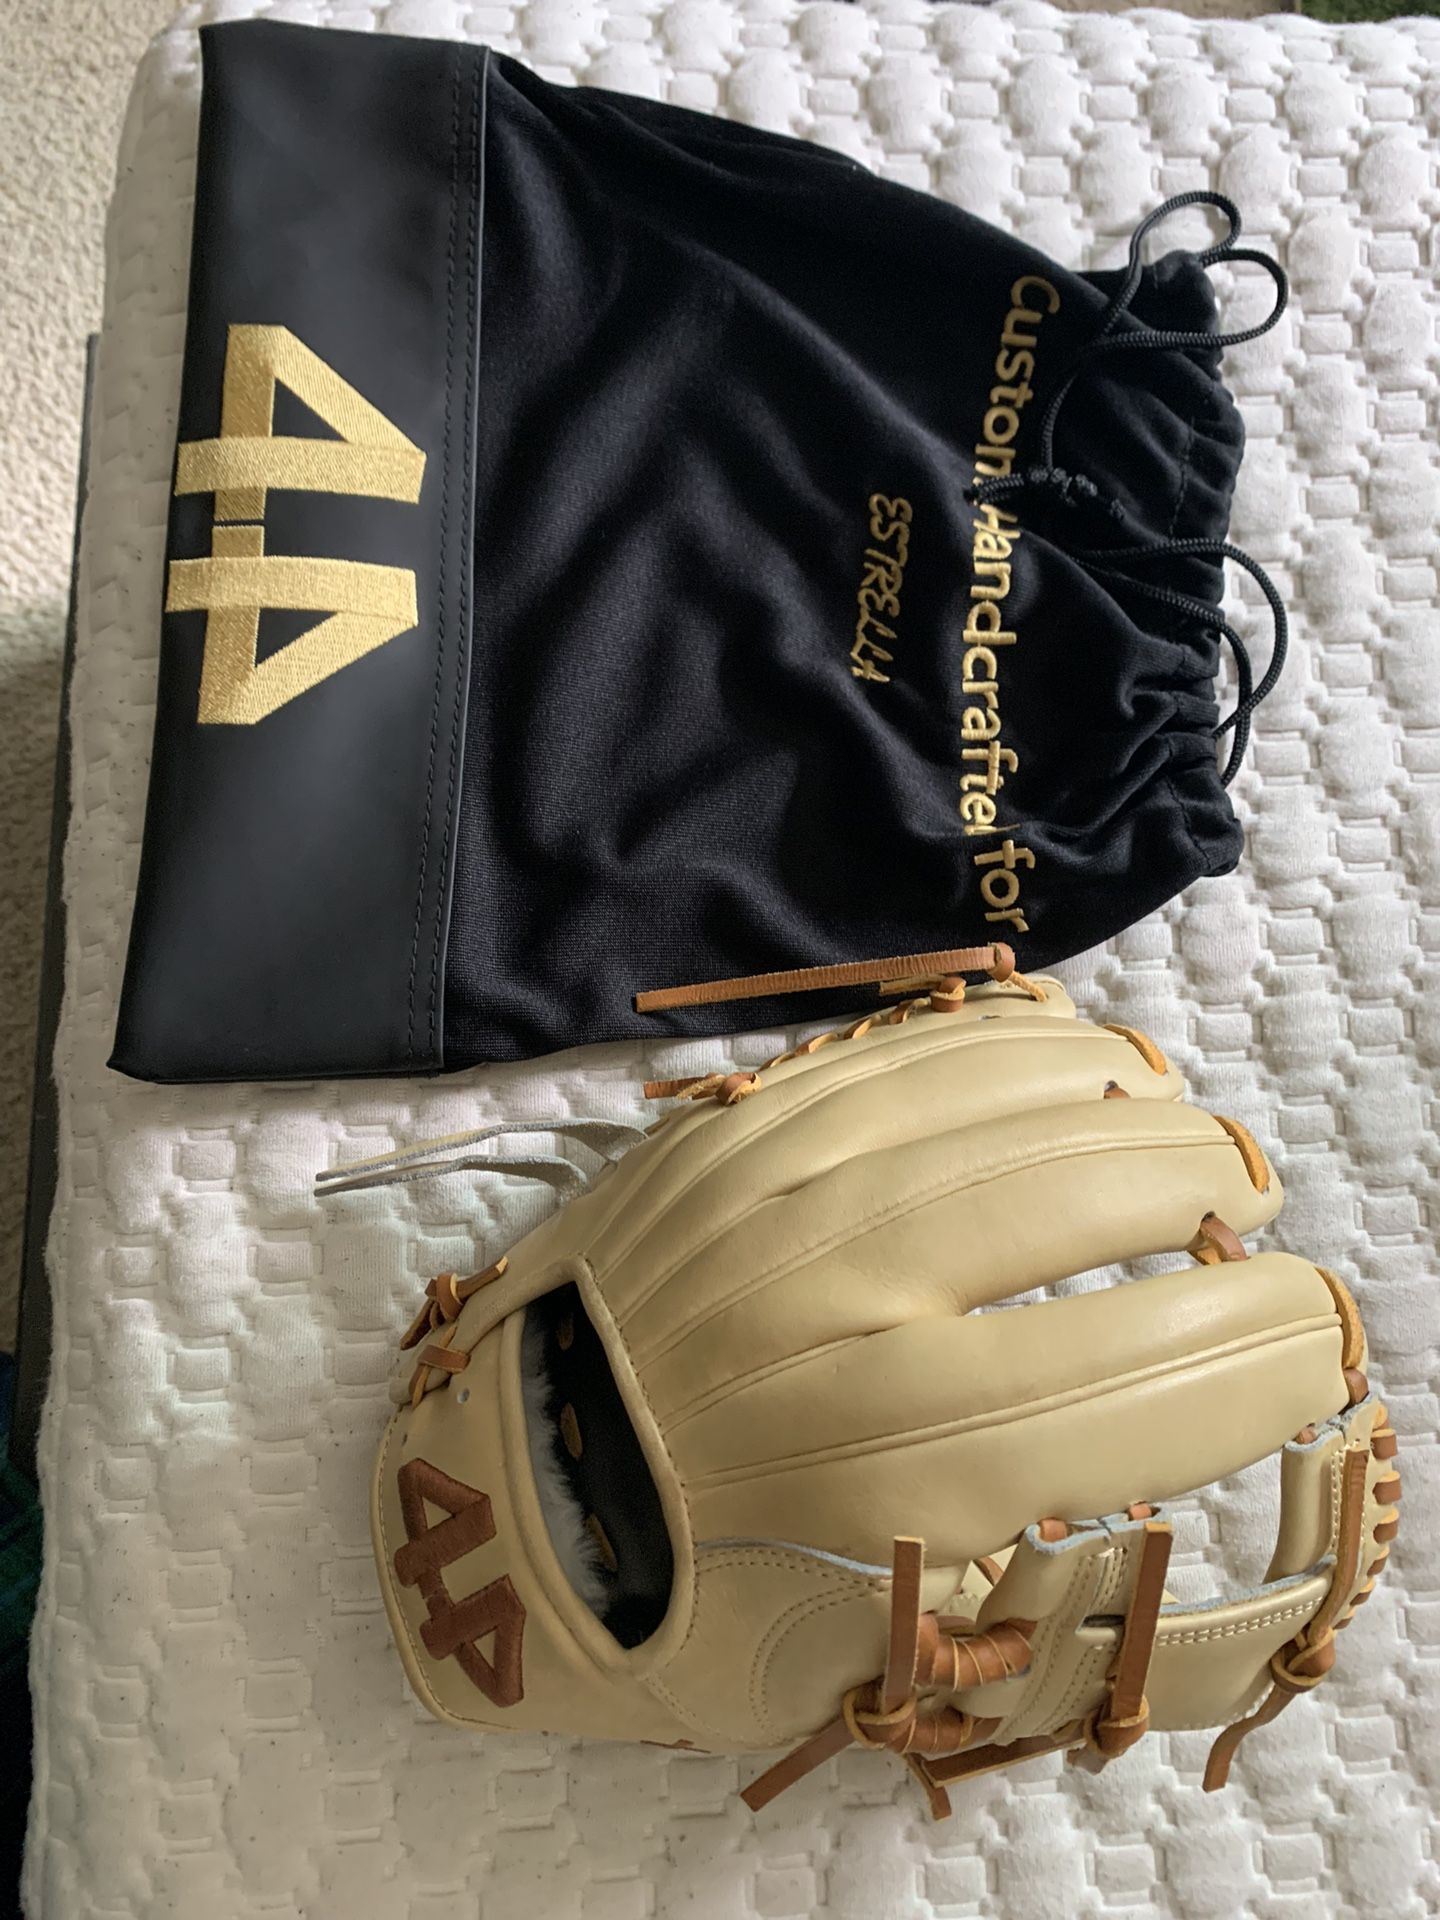 44 Baseball Glove for Sale in Tucson, AZ - OfferUp